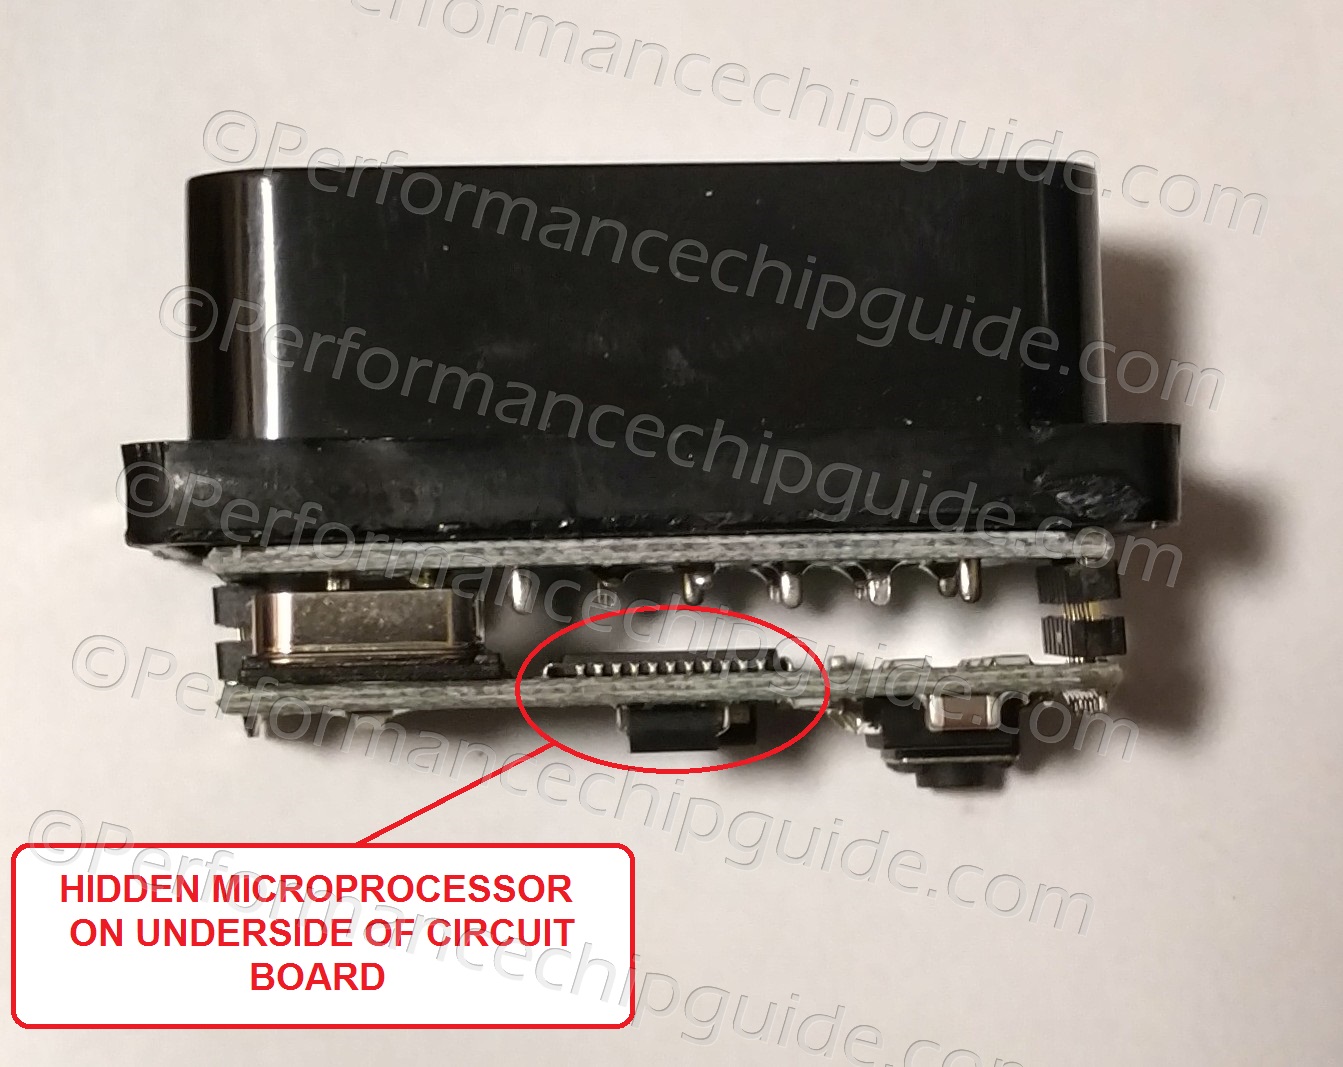 Powertune Engine Tuning Module Hidden Microprocessor